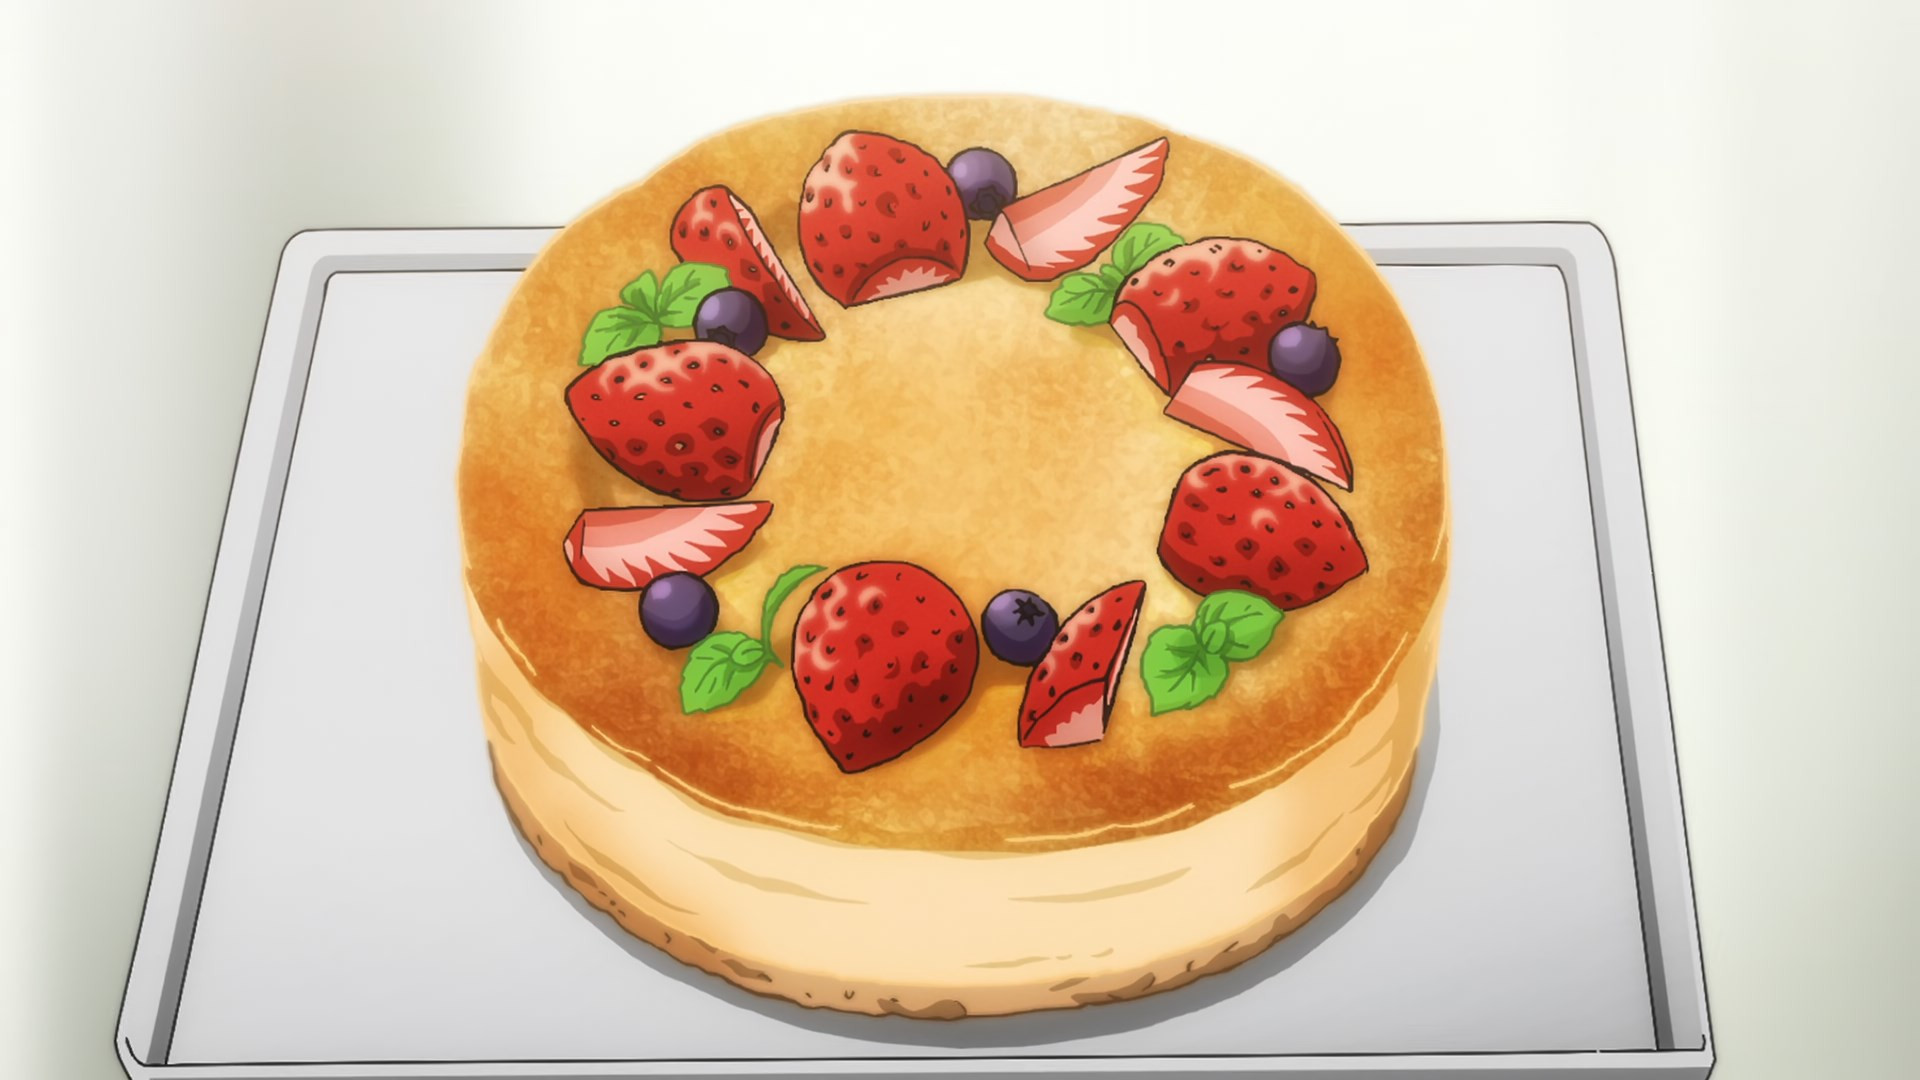 StrawberryShortcake Reviews: Kyoukai no Kanata